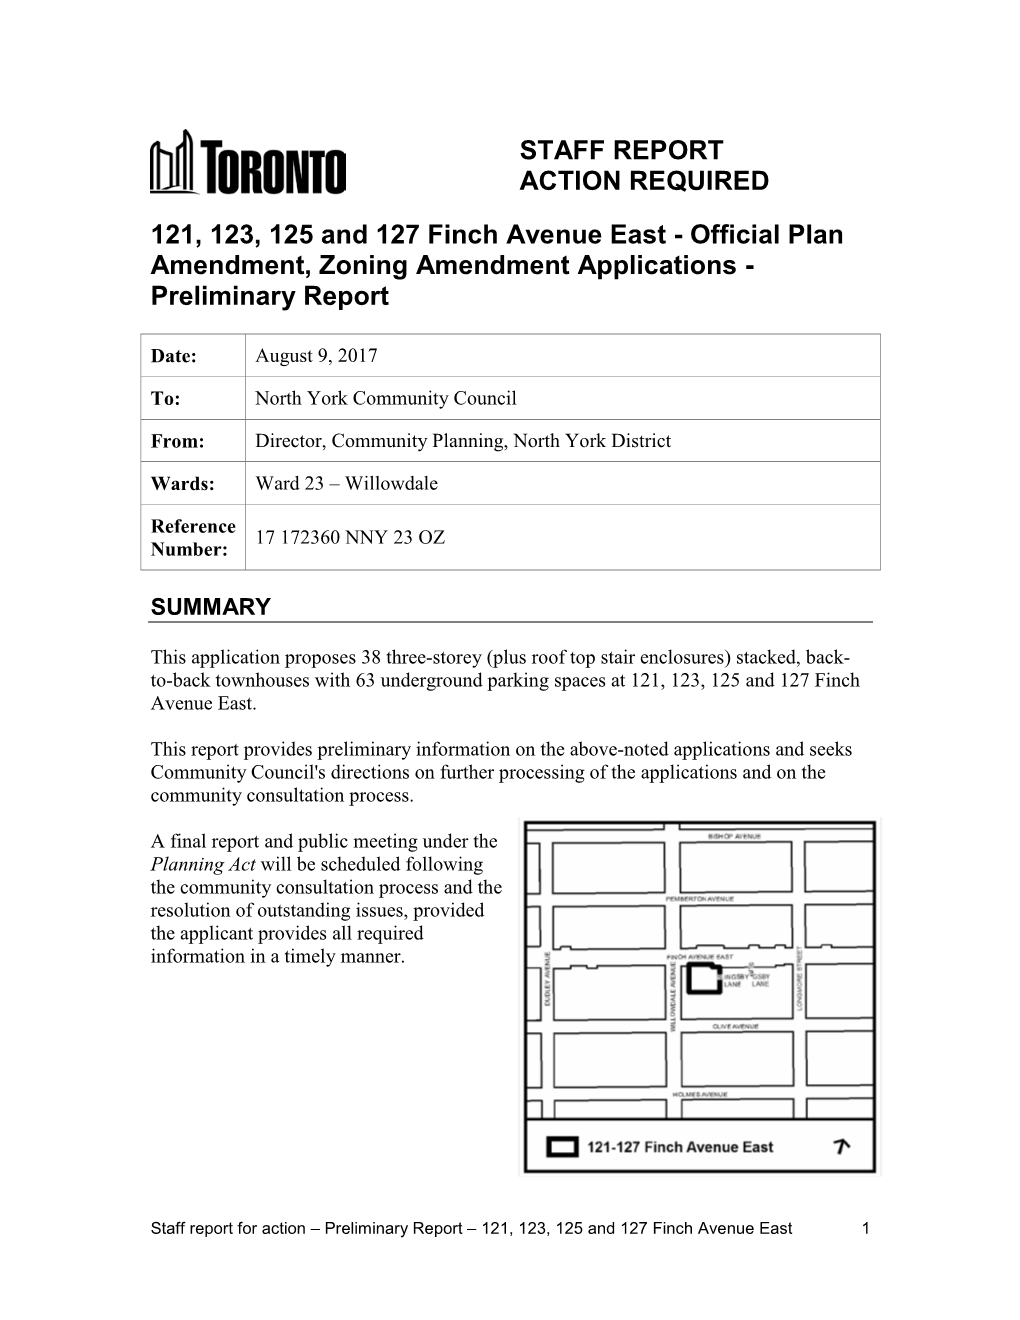 121, 123, 125 and 127 Finch Avenue East - Official Plan Amendment, Zoning Amendment Applications - Preliminary Report